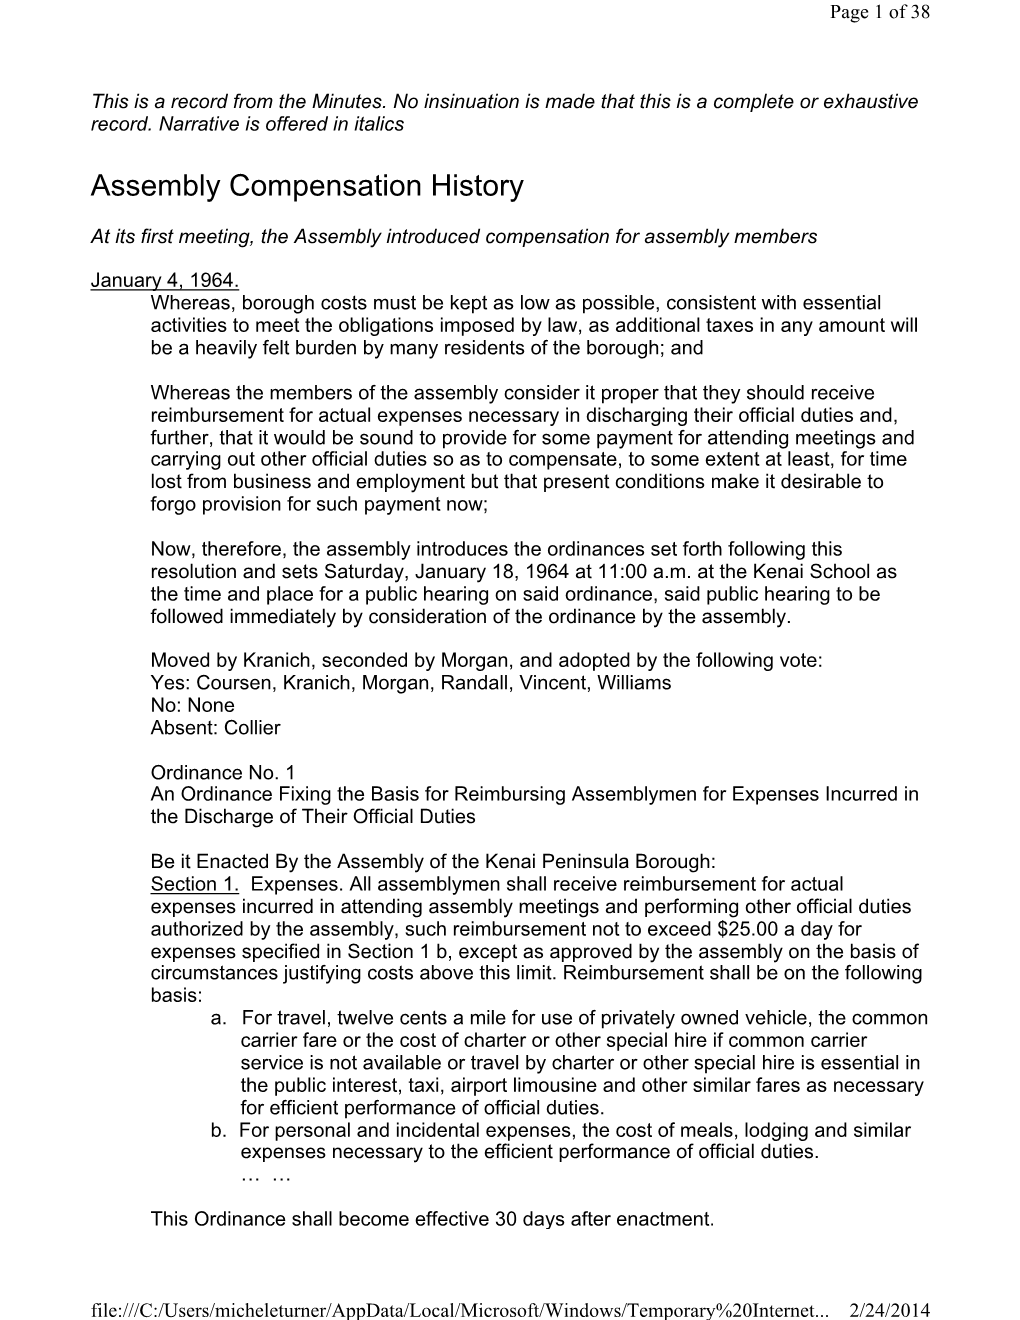 Assembly Compensation History